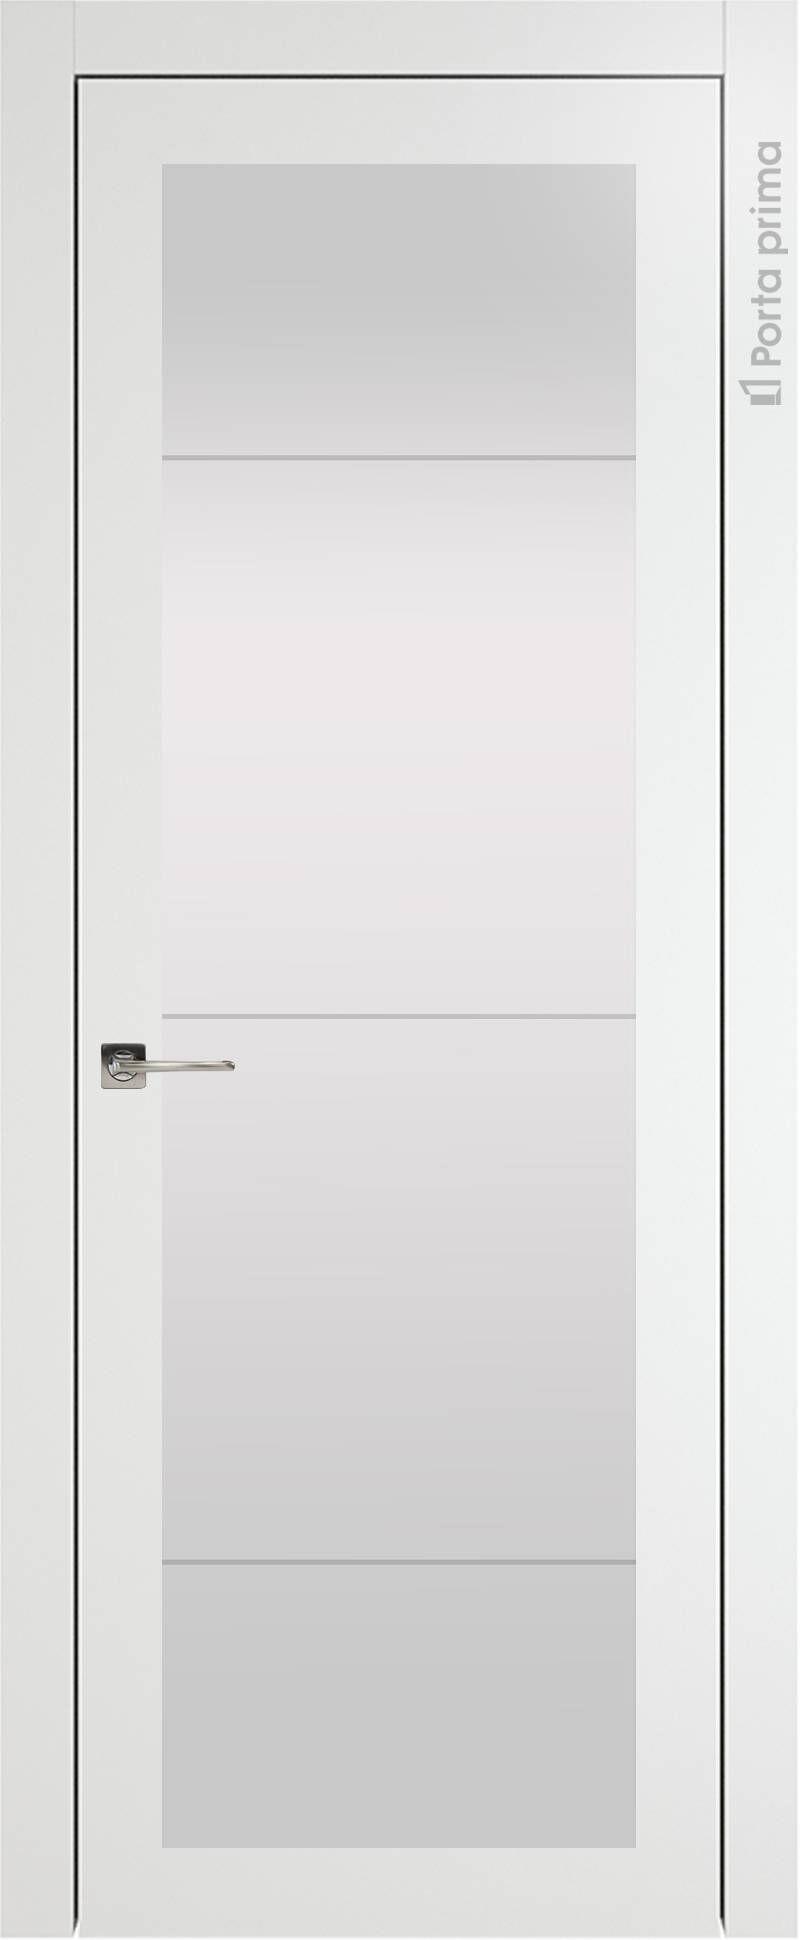 Tivoli З-3 цвет - Белая эмаль (RAL 9003) Со стеклом (ДО)